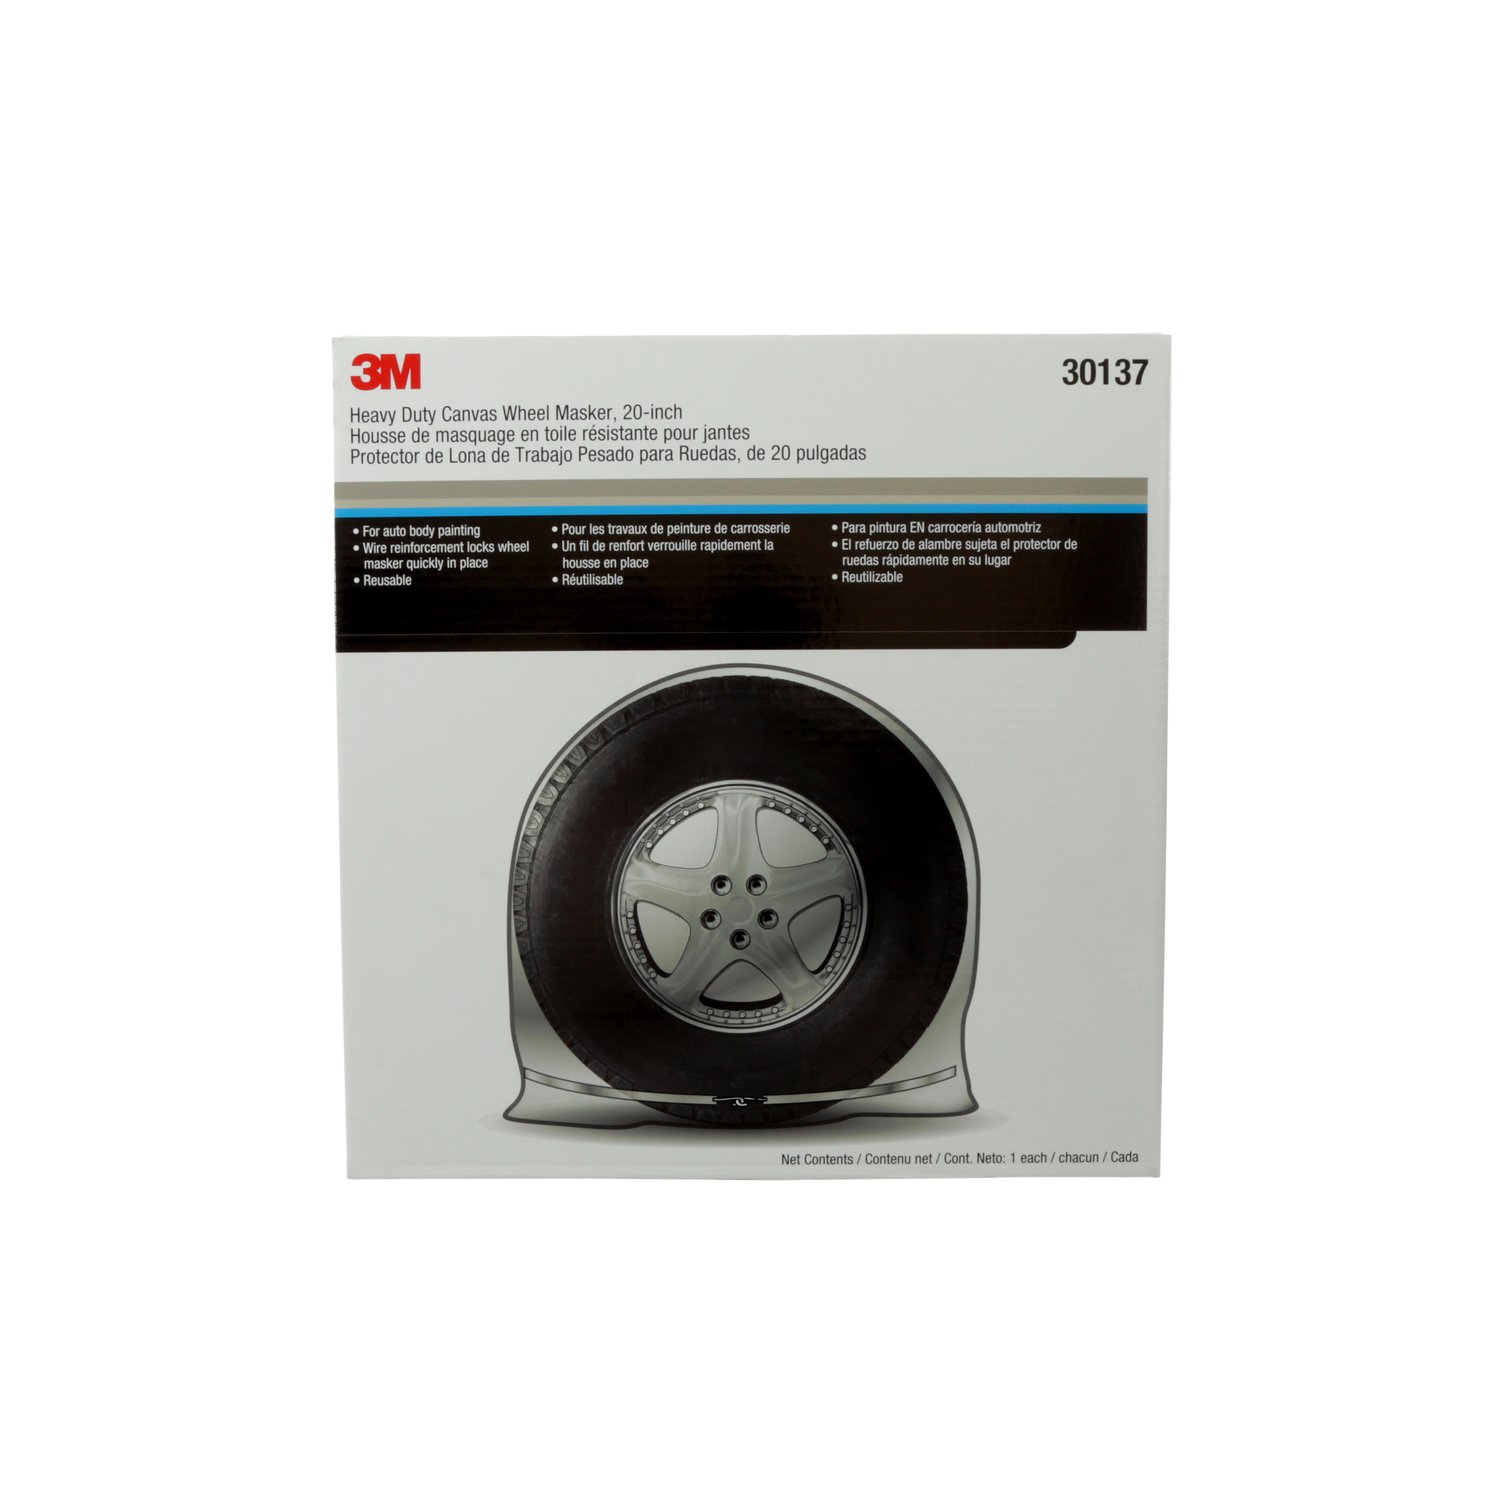 7100145359 - 3M Heavy Duty Canvas Wheel Masker, 30137, 20 inch, 4 per pack, 4 packs
per case